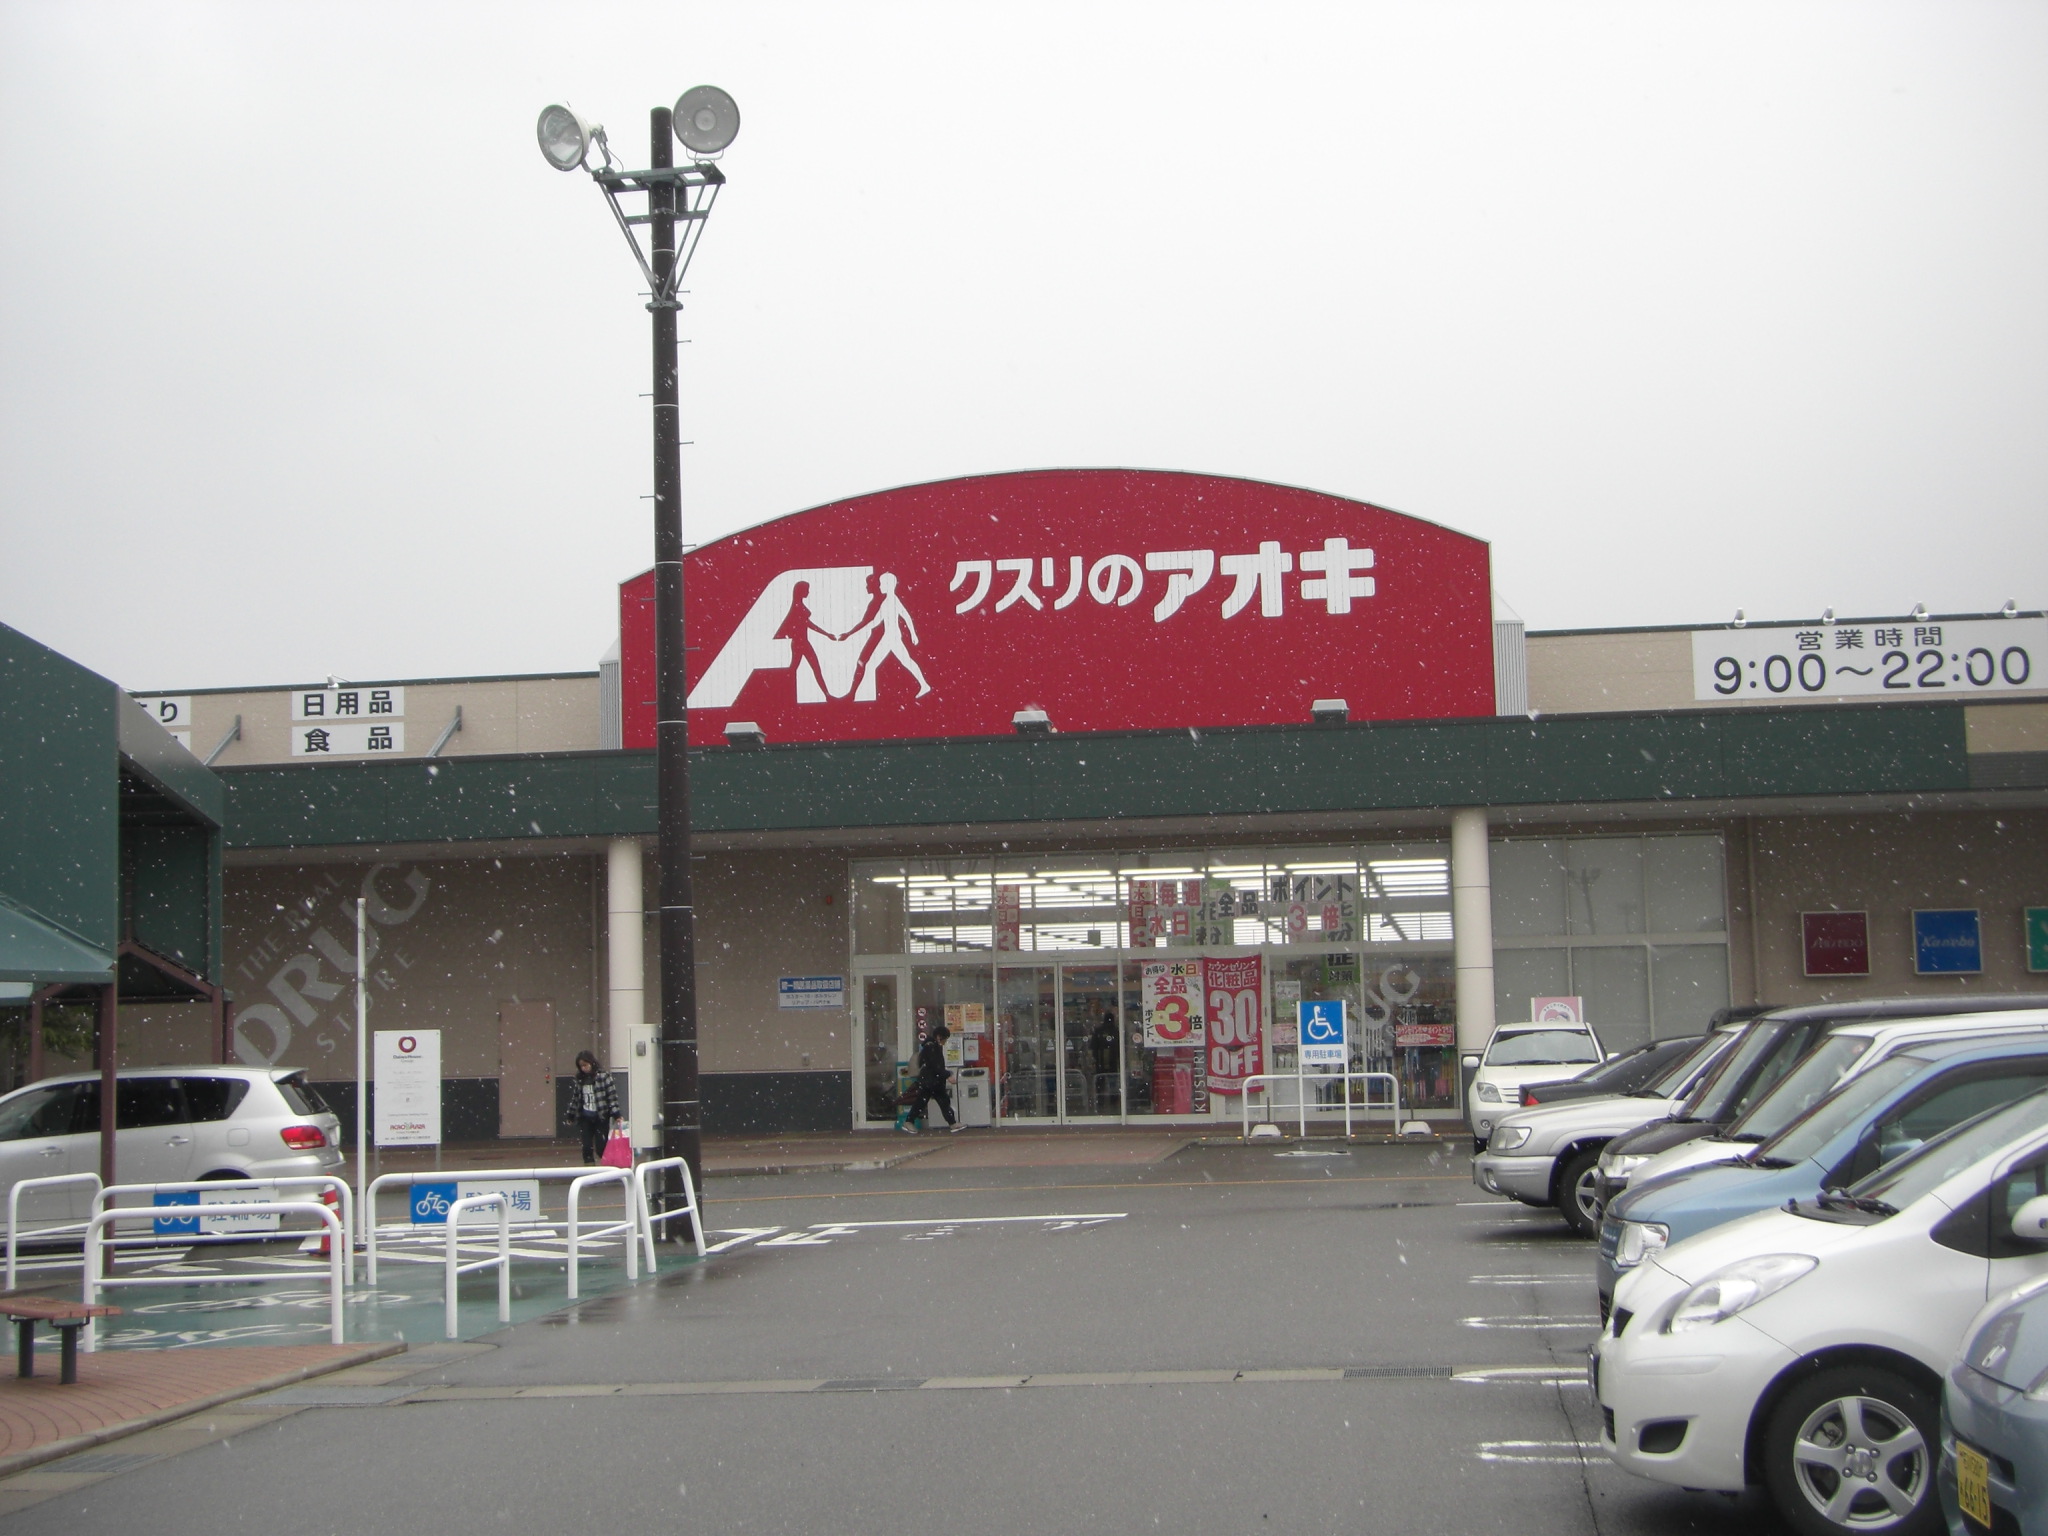 Dorakkusutoa. Medicine of Aoki Nonoichi center shop 680m until (drugstore)